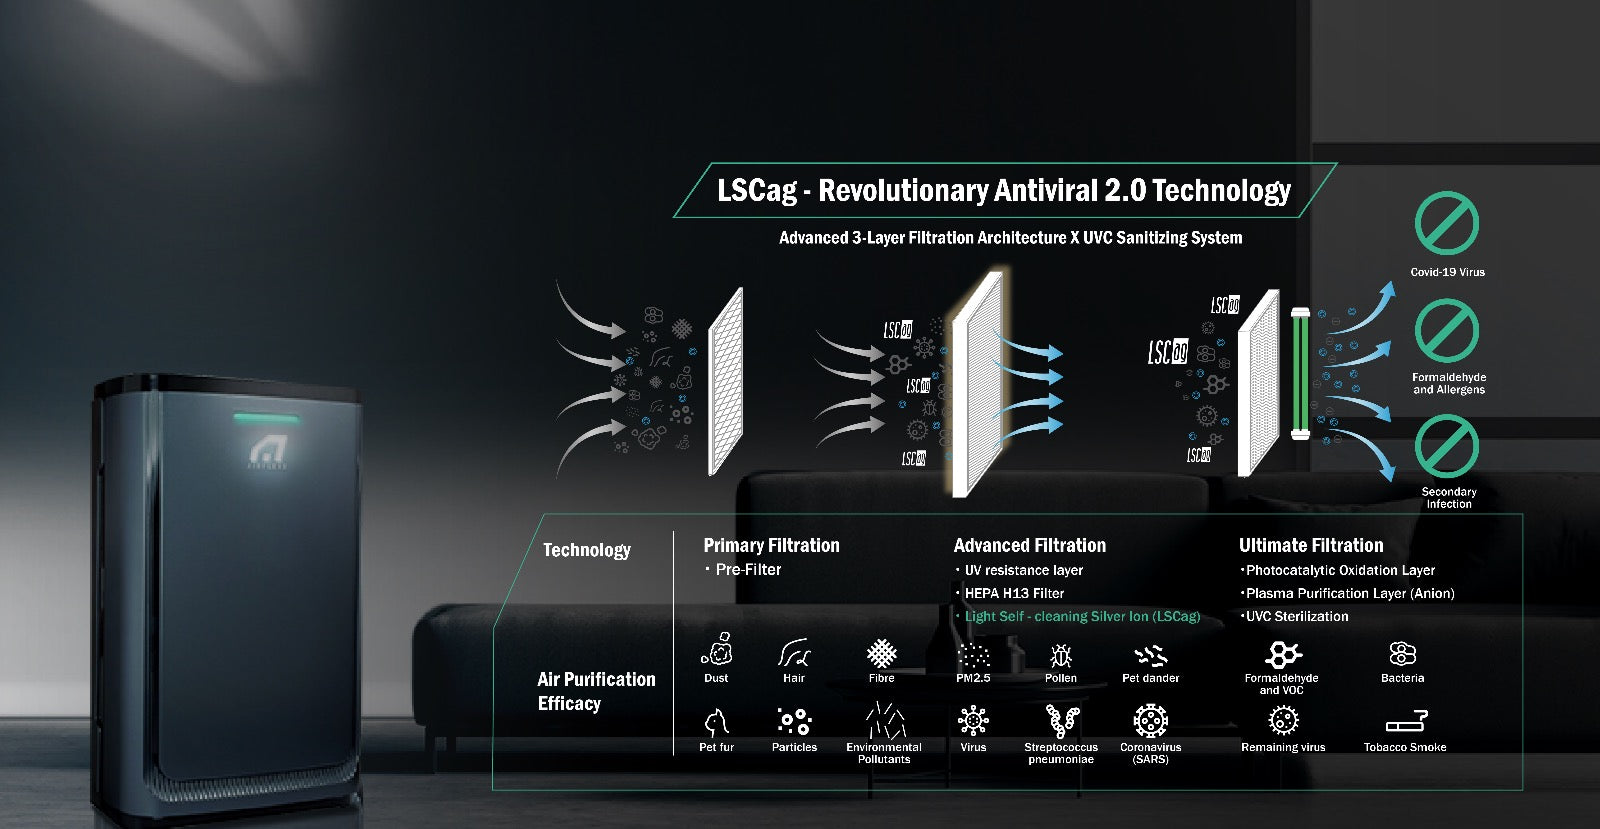 LSCag - Revolutionary Antiviral 2.0 Technology